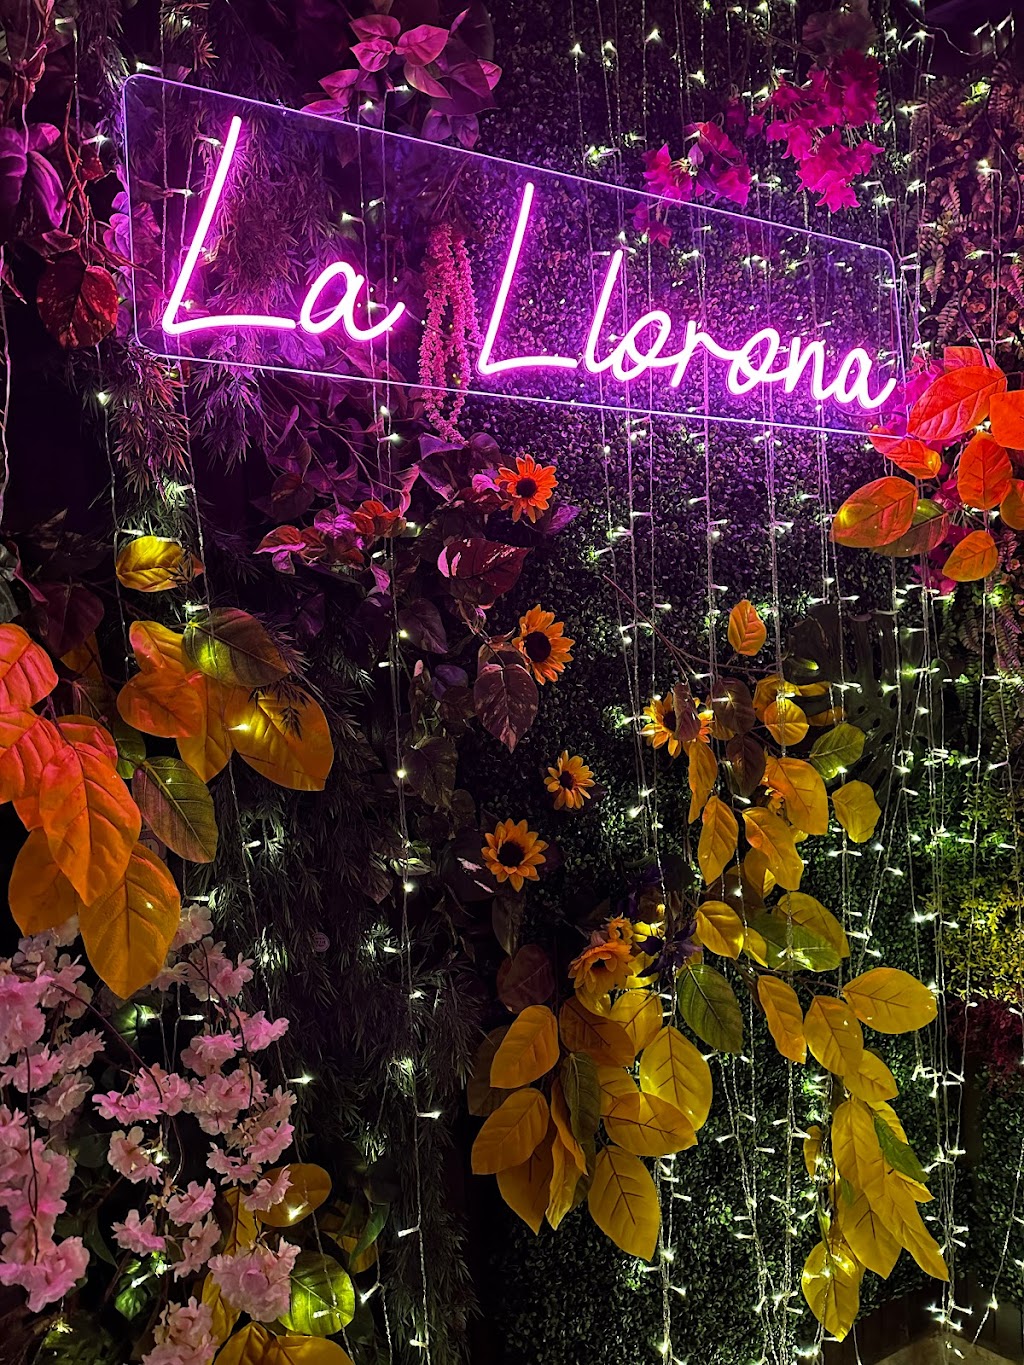 La Llorona Street Mexican Kitchen & Tequila Lounge | 105 Linden Rd, Roselle, NJ 07203 | Phone: (908) 259-5431